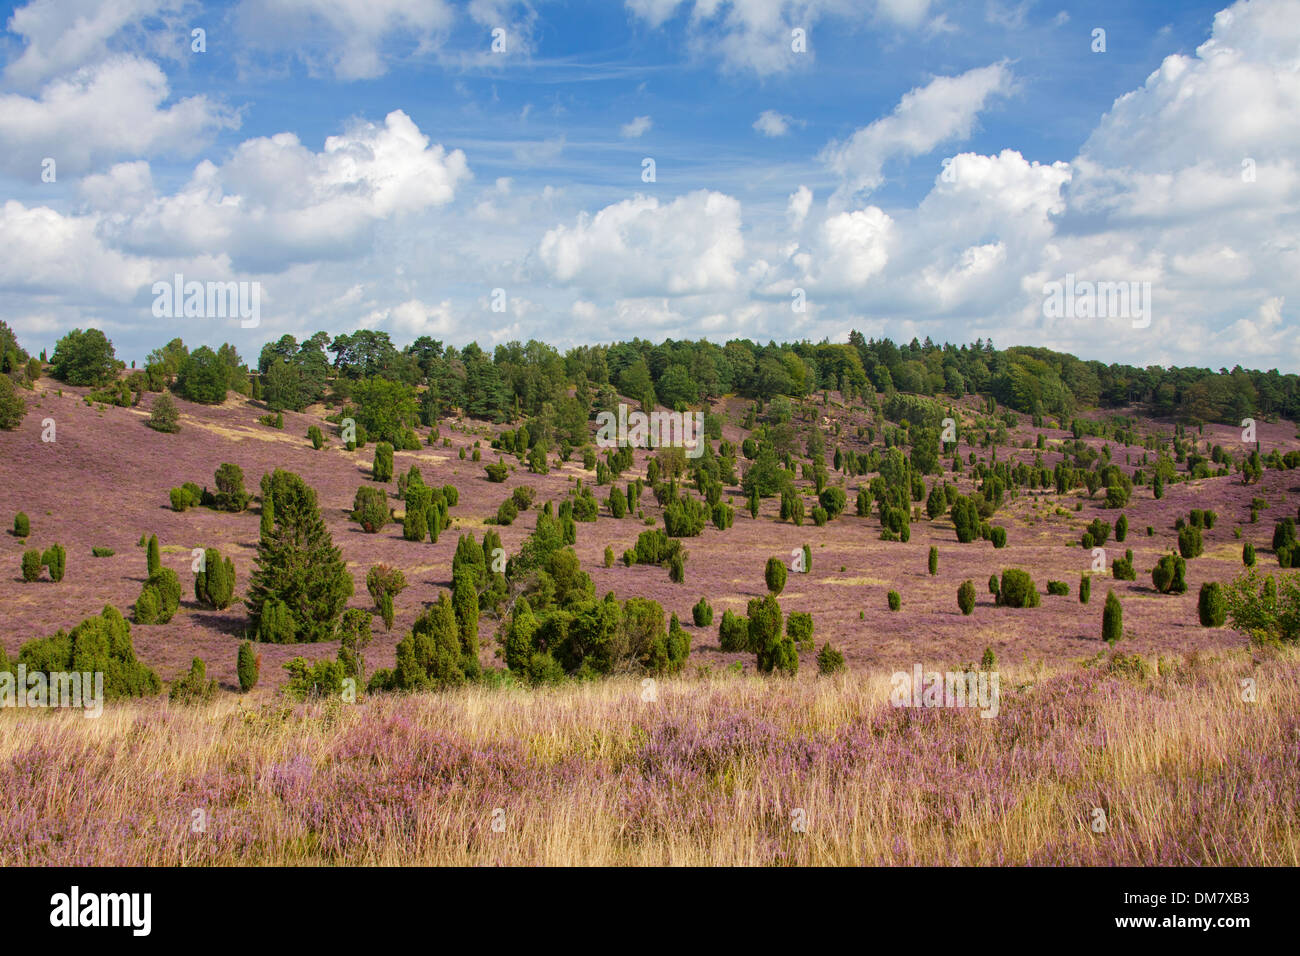 Lüneburg Heath / Lunenburg Heathland showing  juniper trees and heather / ling, Totengrund / Wilseder Berg, Saxony, Germany Stock Photo